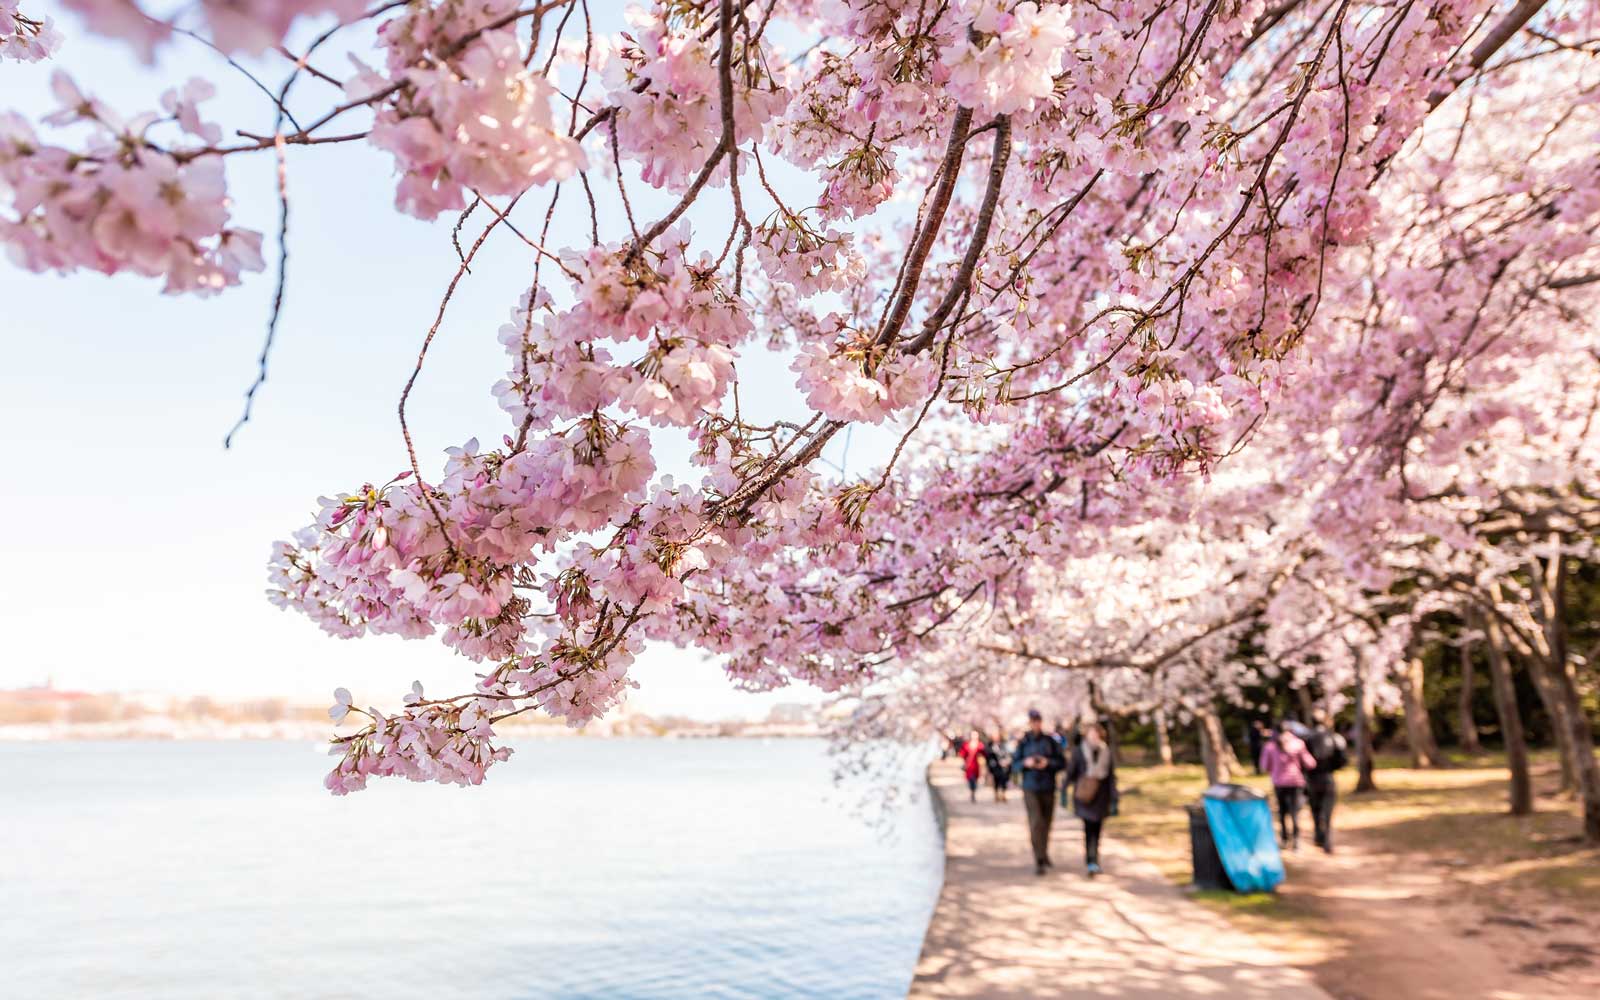 Cherry Blossom Festival 2021 – Take a Fun Trip